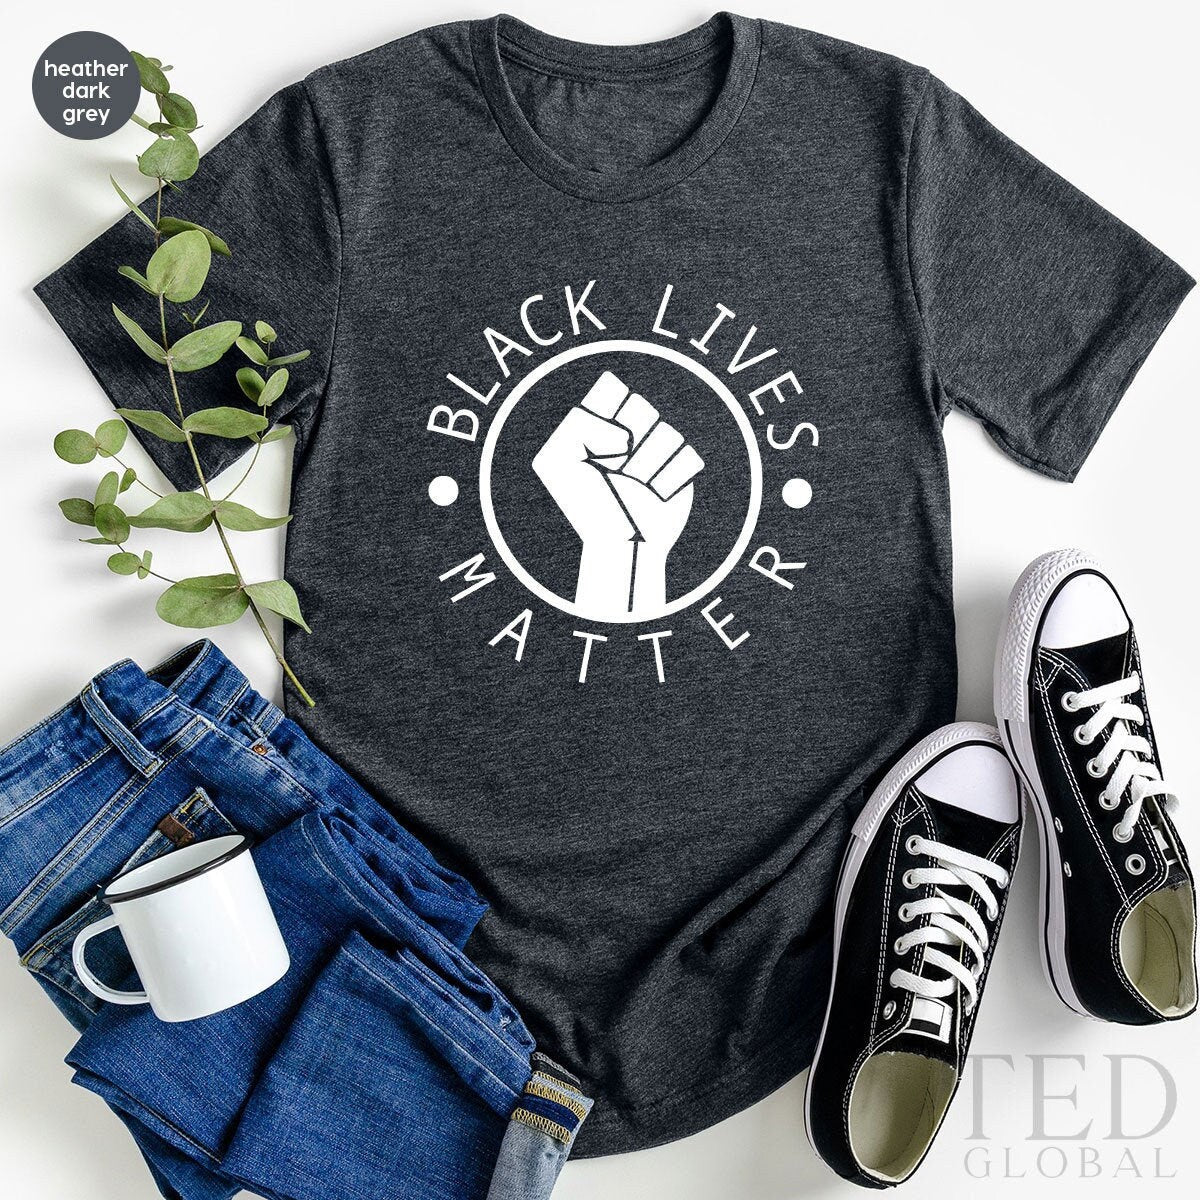 BLM TShirt, Black Lives Matter Shirt, Racial Equality Shirt, Shirt, Protester T Shirt, Black Live Matter, Social Justice, Anti Racism Shirt - Fastdeliverytees.com